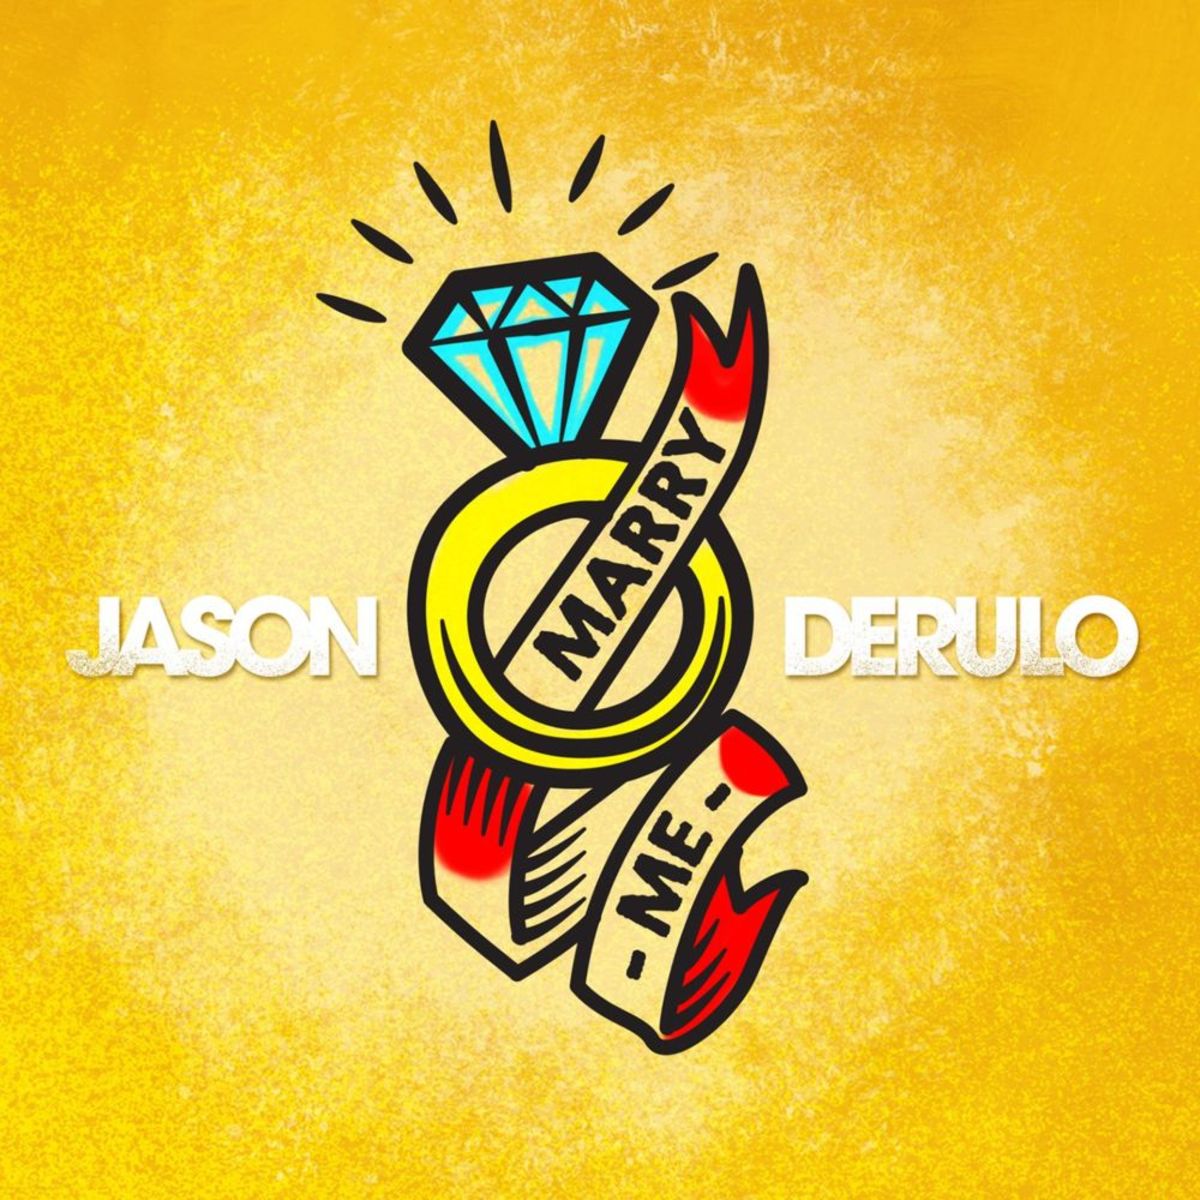 Jason Derulo, "Marry Me"